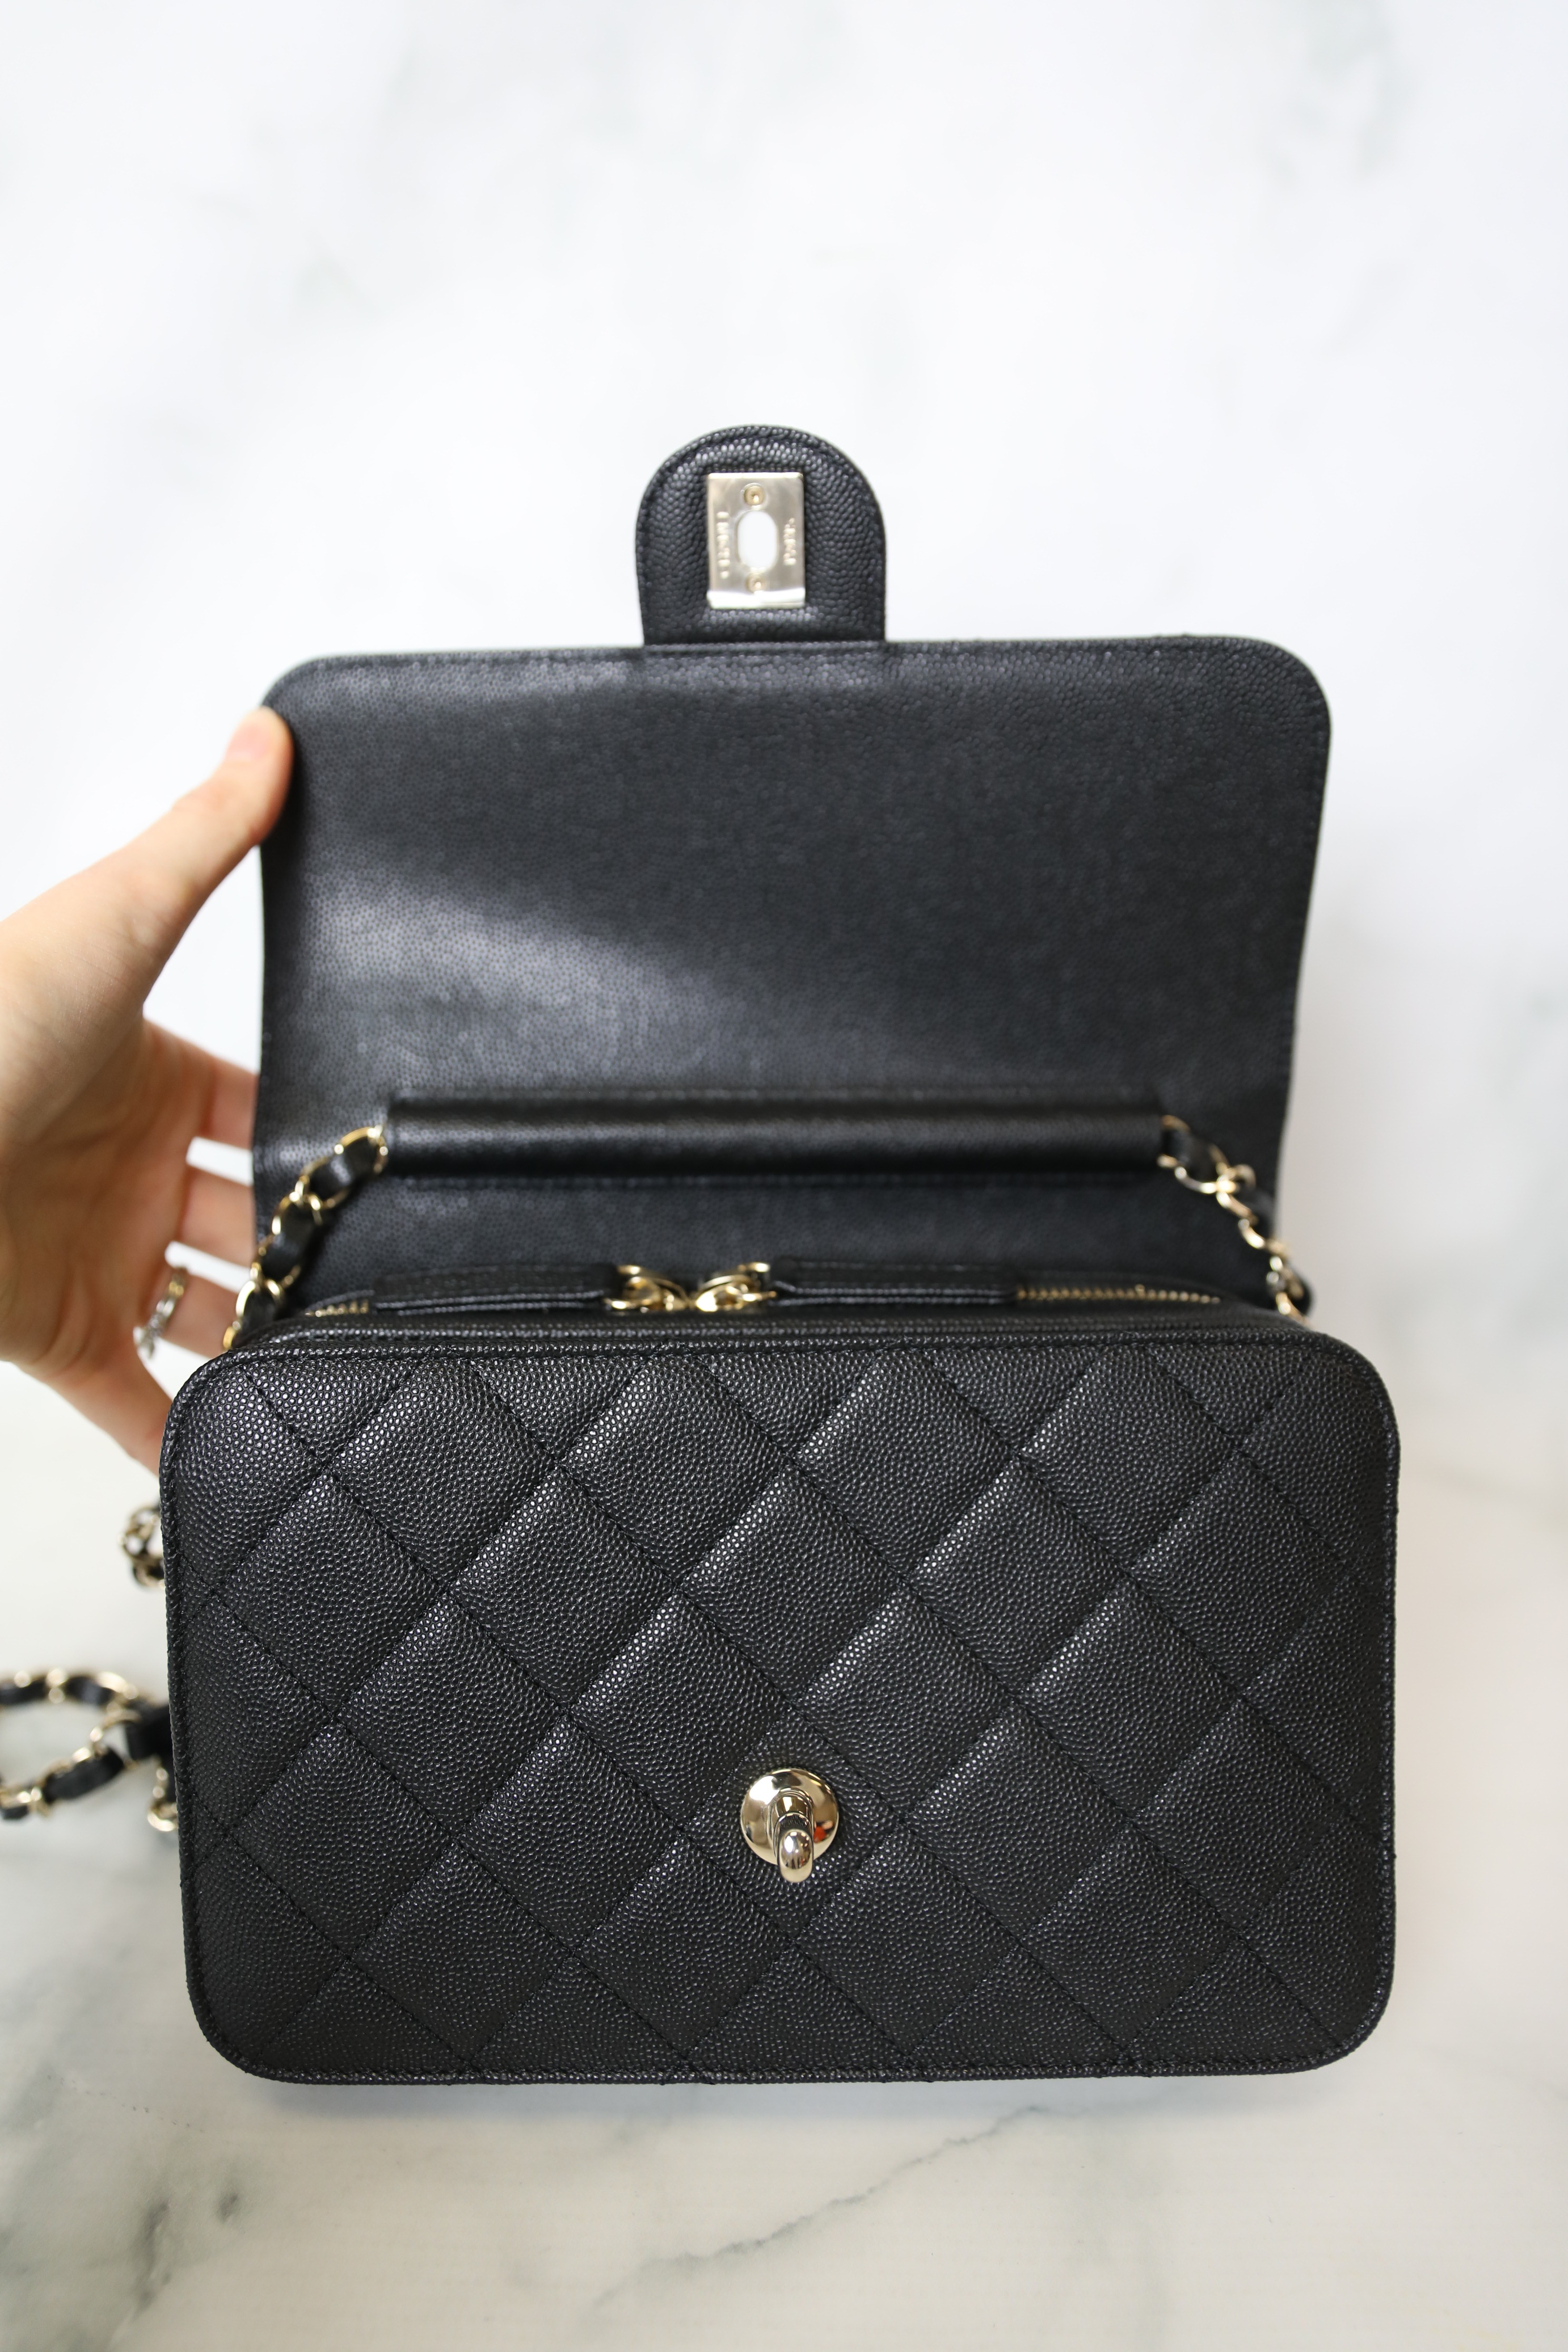 Chanel Like a Wallet Flap Medium, Black Caviar with Gold Hardware, New in  Box WA001 - Julia Rose Boston